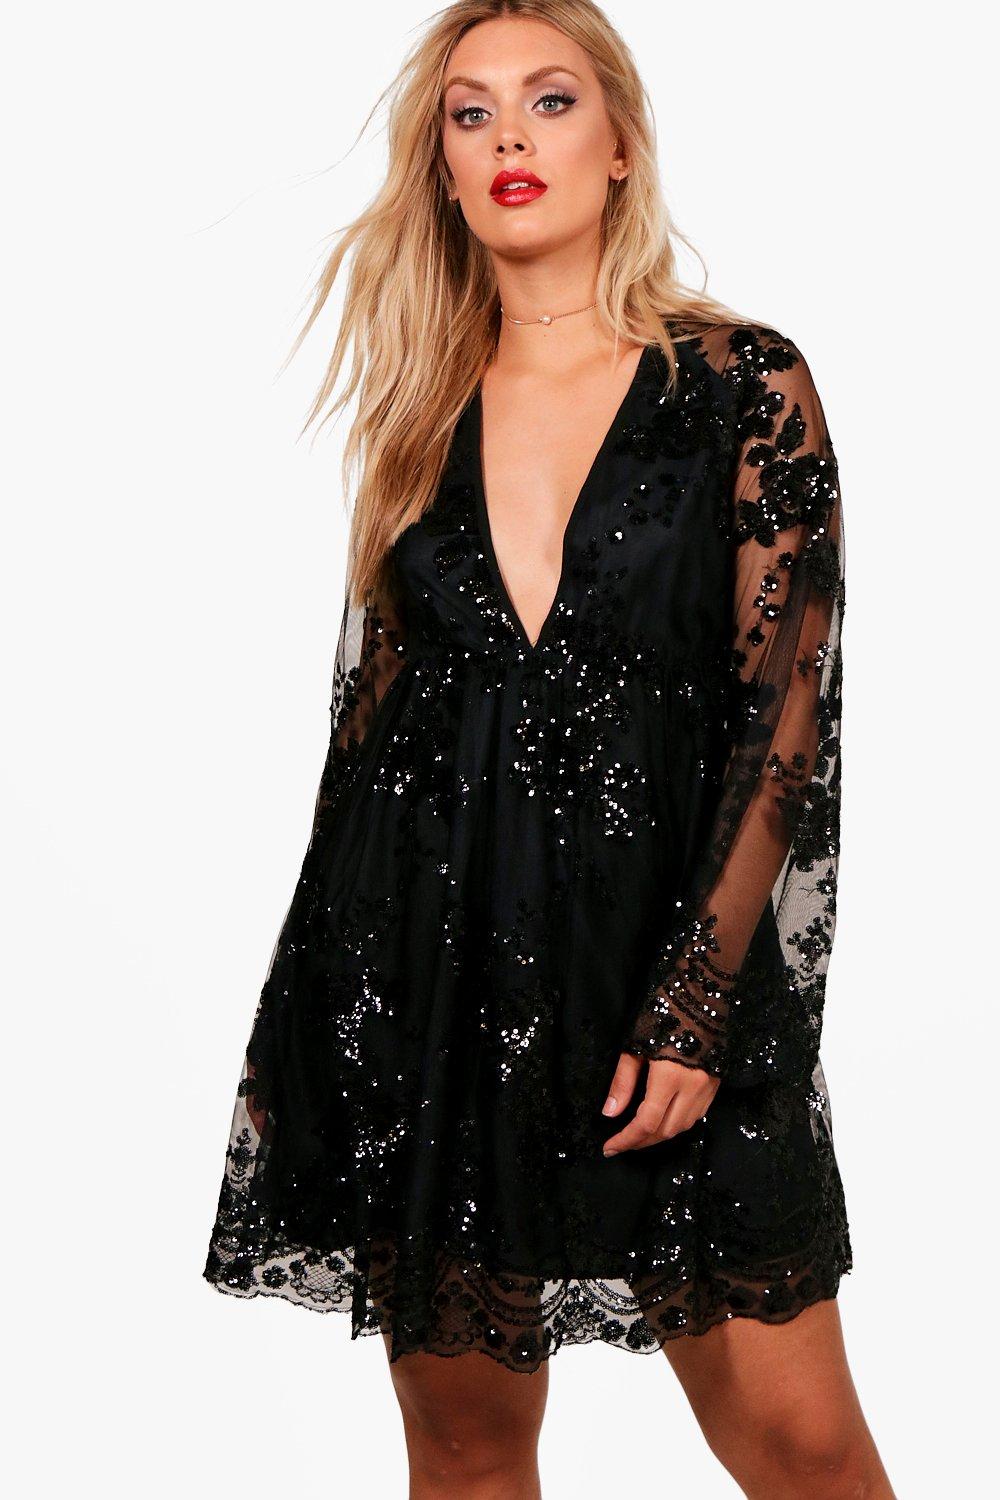 boohoo black sparkly dress